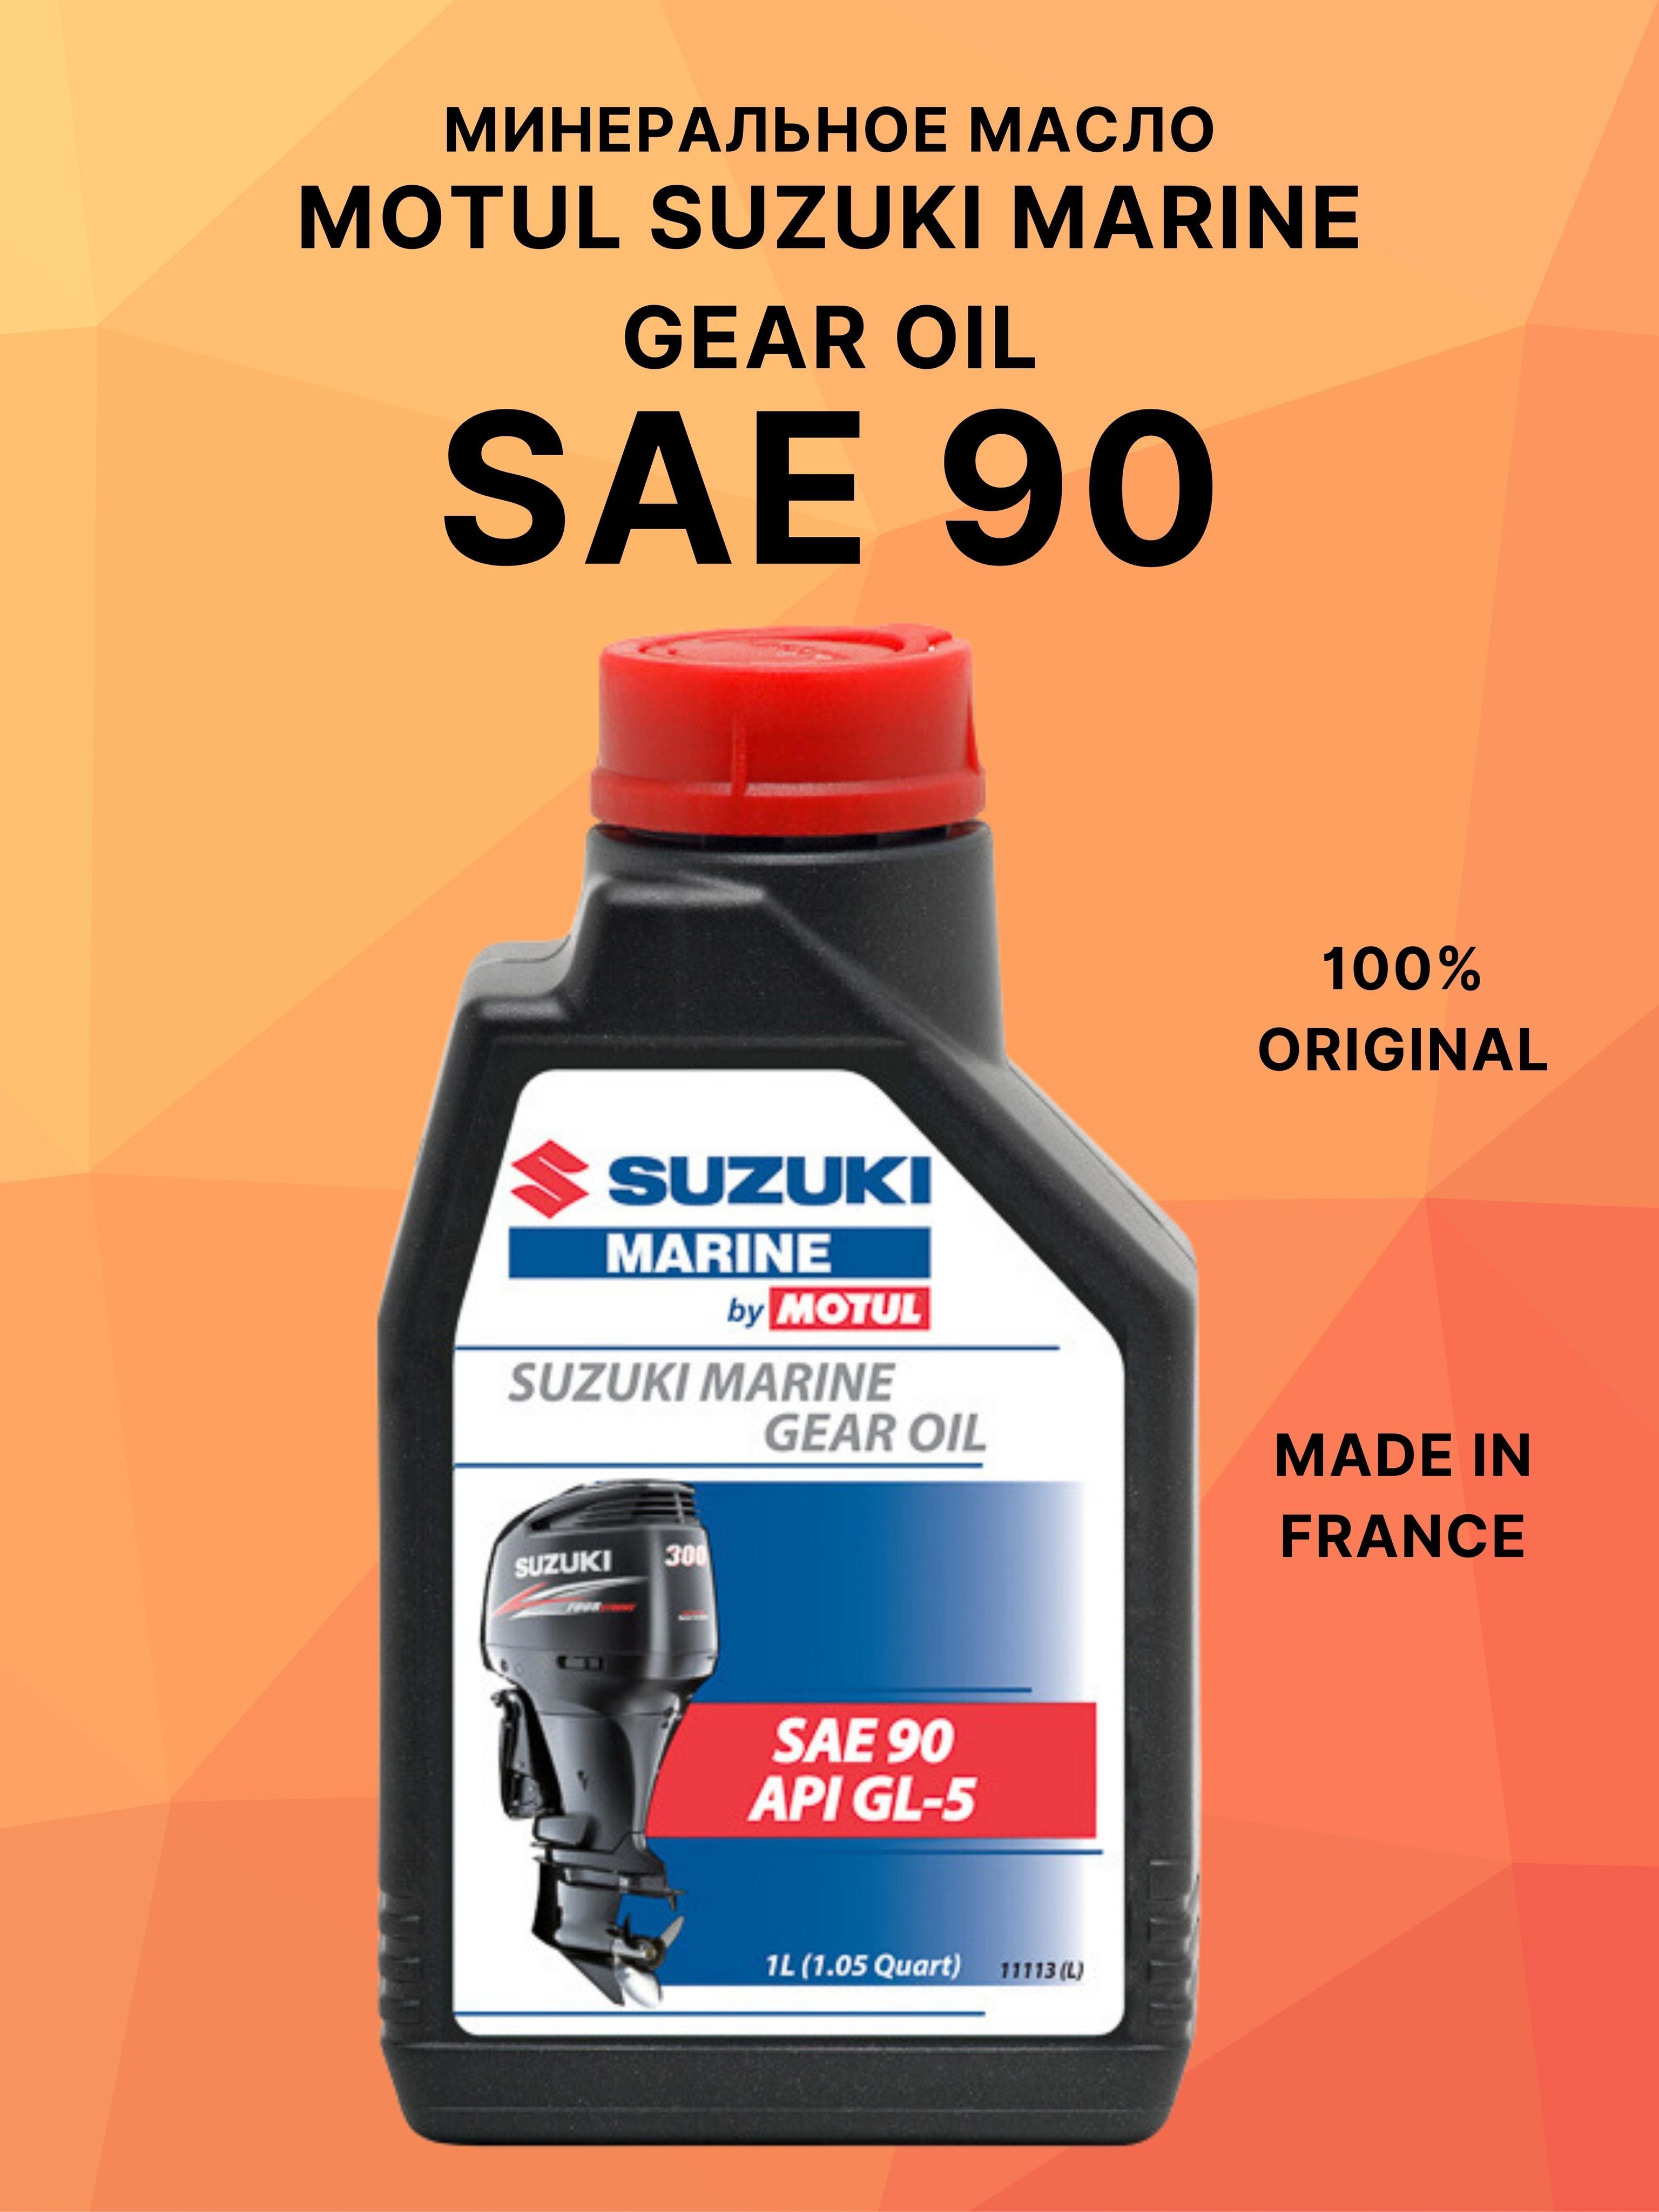 Лодочное трансмиссионное масло купить. ) 4t Motul Suzuki Marine 10w-30 API-SL. Трансмиссионное масло для лодочного мотора Genuine Gear Oil API gl 5 SAE 80-90 370мл. Масло Motul Suzuki Marine Gear Oil SAE 90 1л., 108879 (021-115).